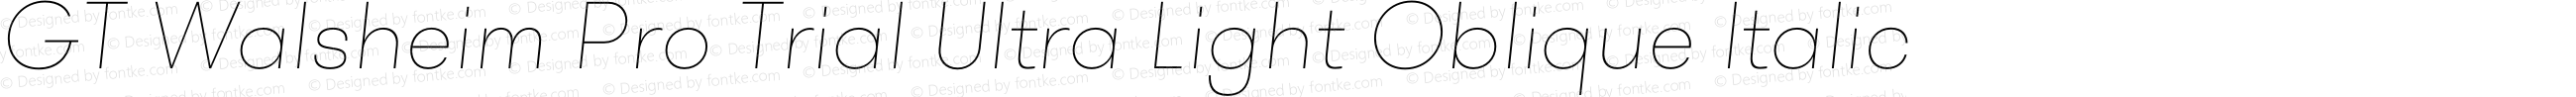 GT Walsheim Pro Trial Ultra Light Oblique Italic